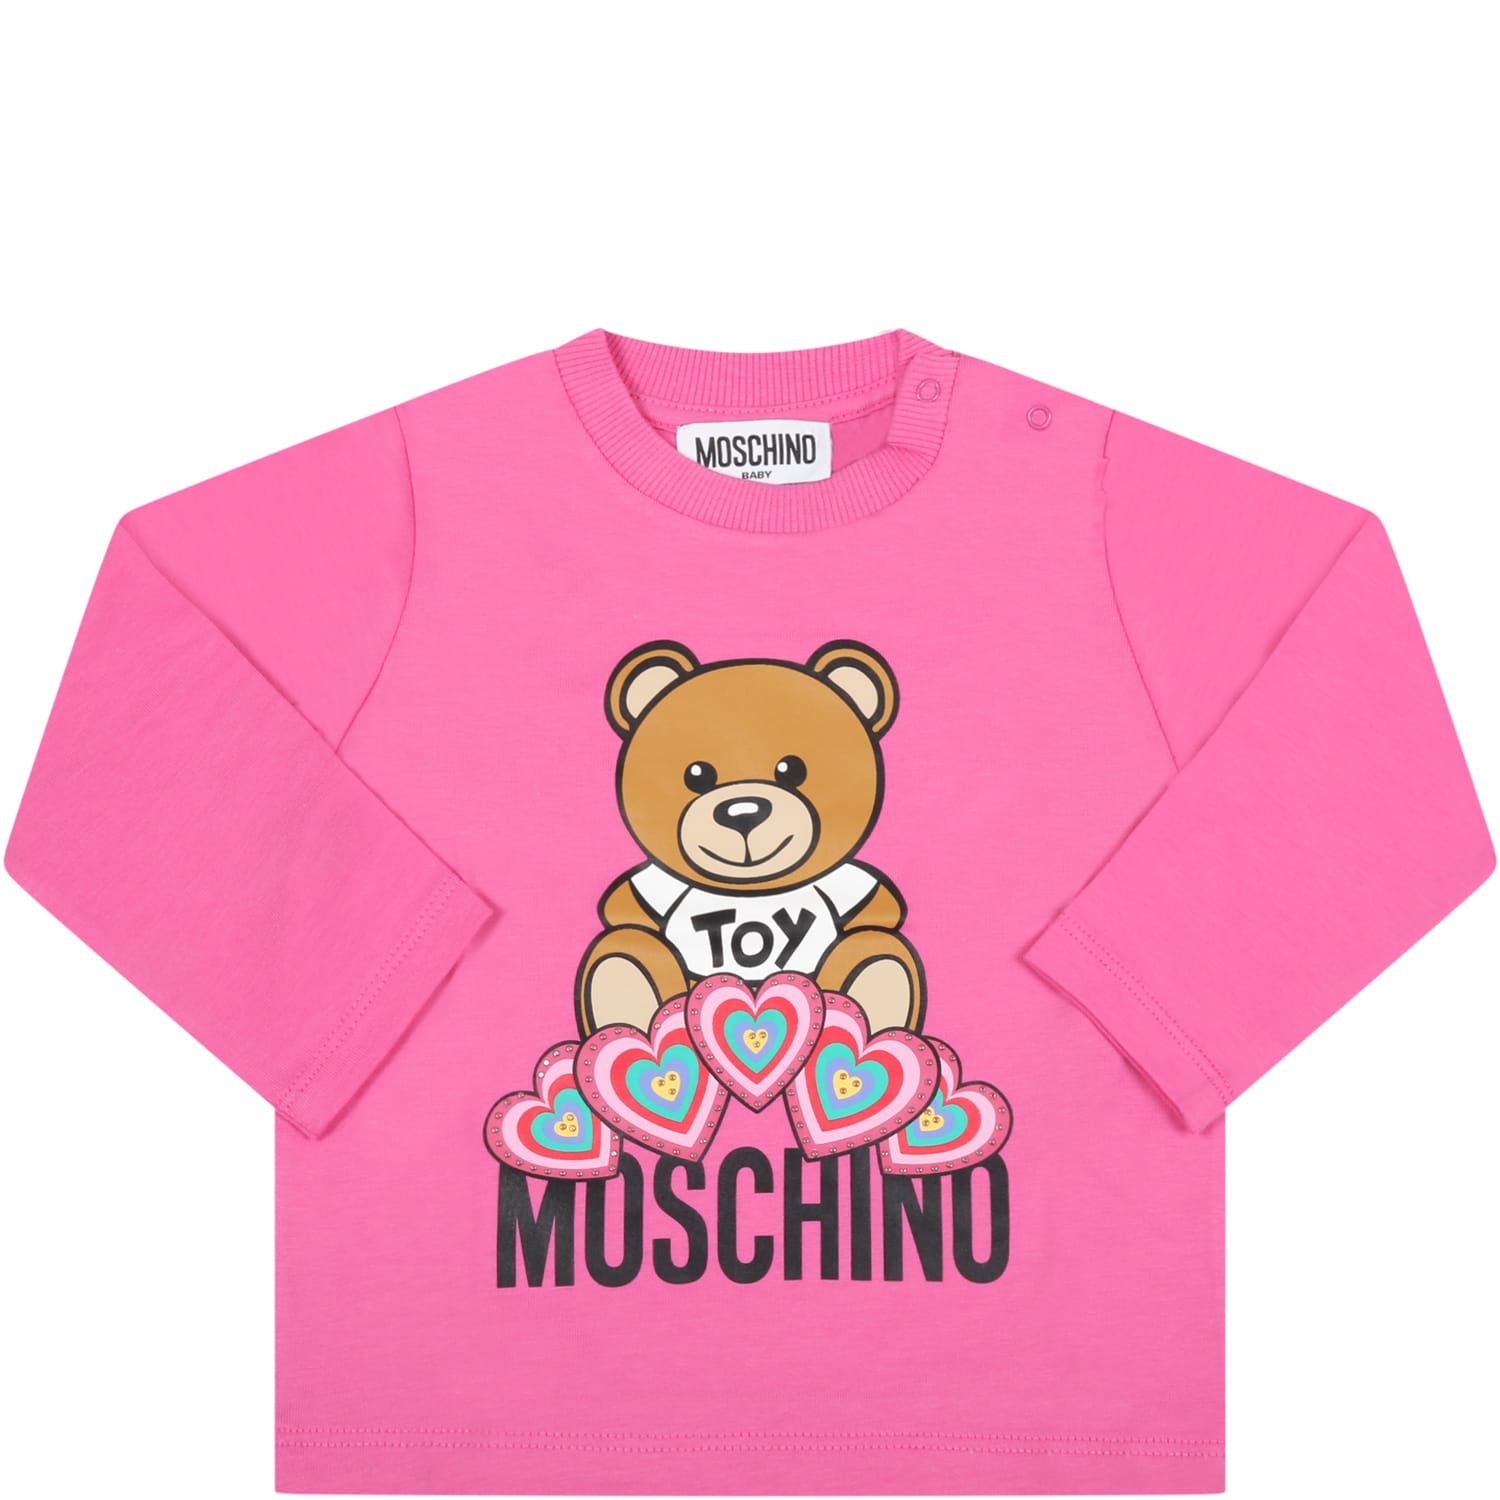 Moschino Fuchsia T-shirt For Baby Girl With Teddy Bear